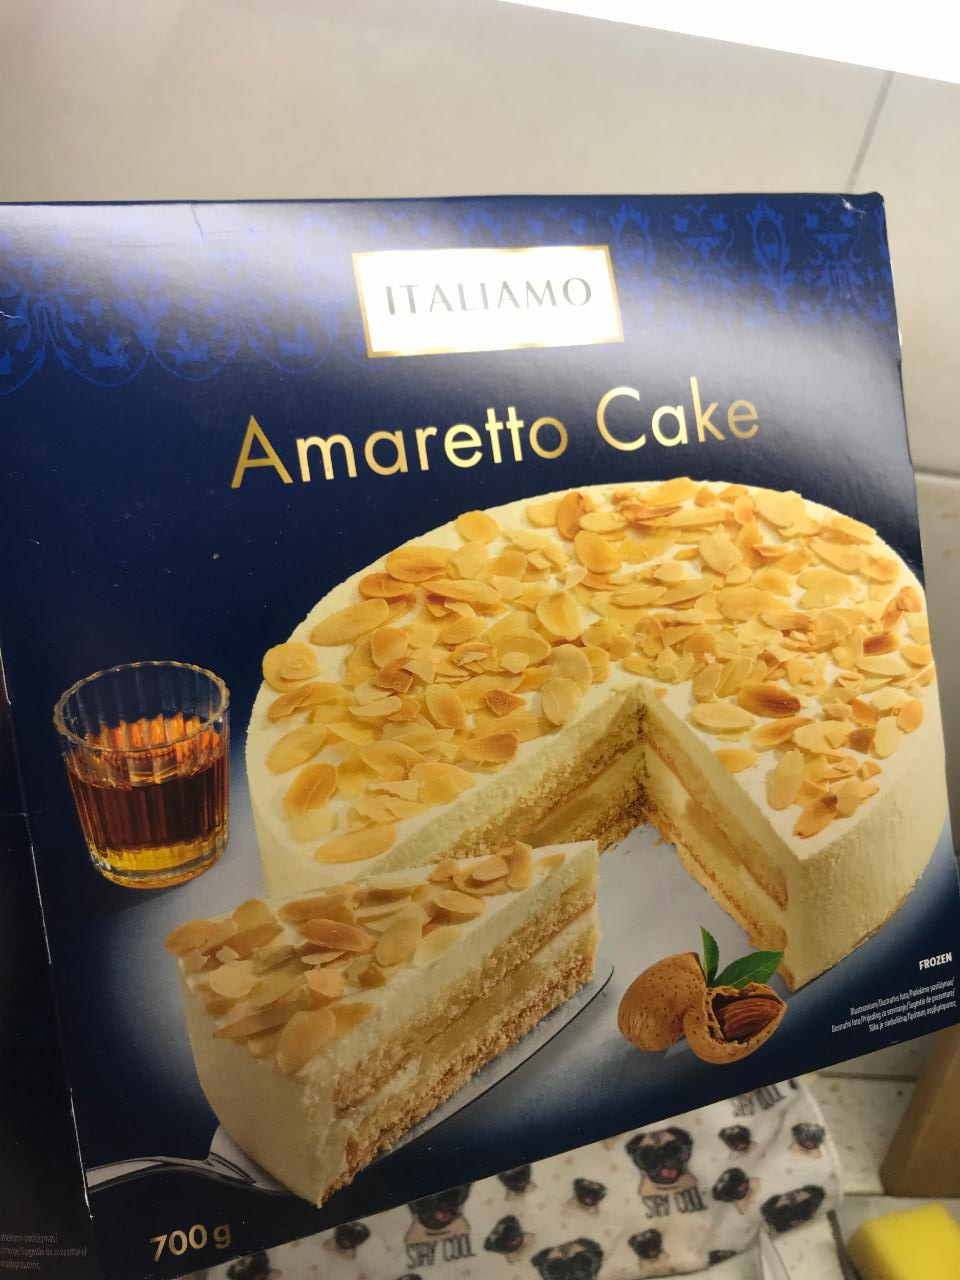 Фото - торт миндальный аморетто Amaretto Cake Italiamo